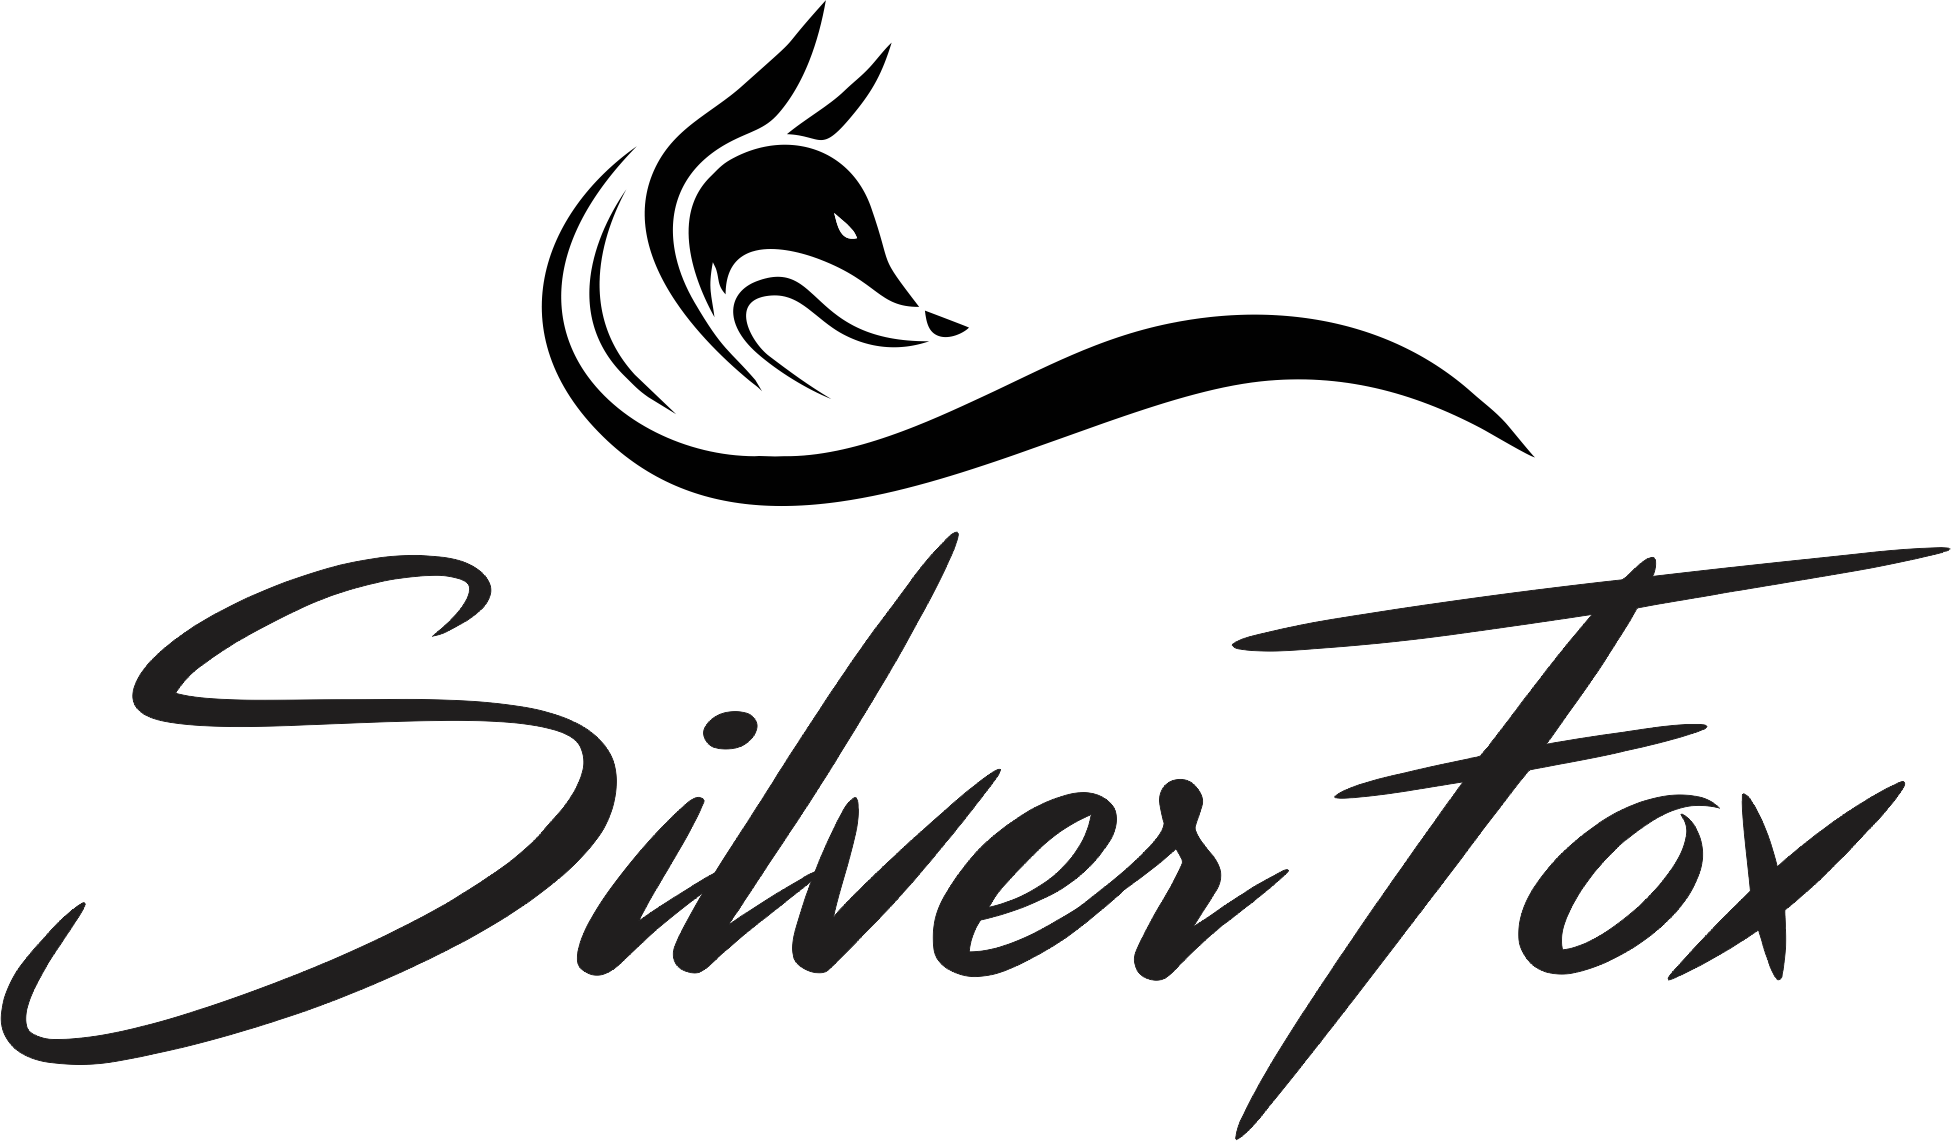 Silver Fox Logo - Silver Fox Arcade. Barbados' best entertainment arcade